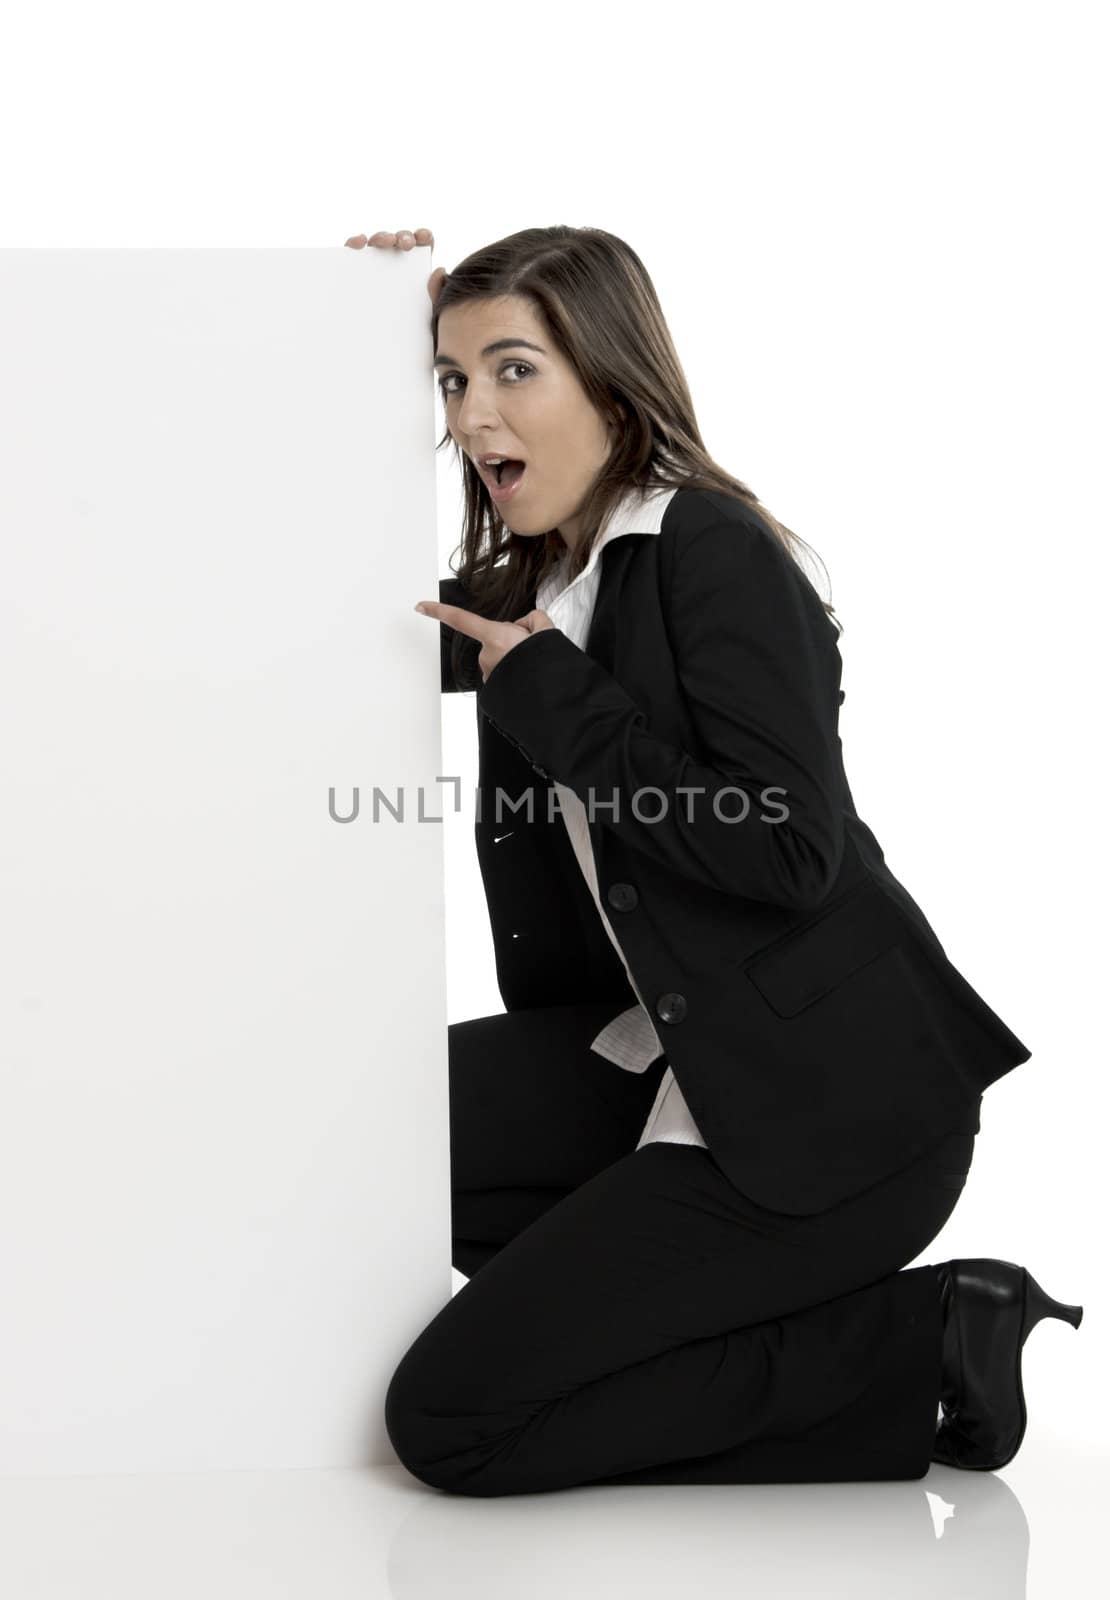 Portrait of a beautiful surprised woman holding a blank billboard